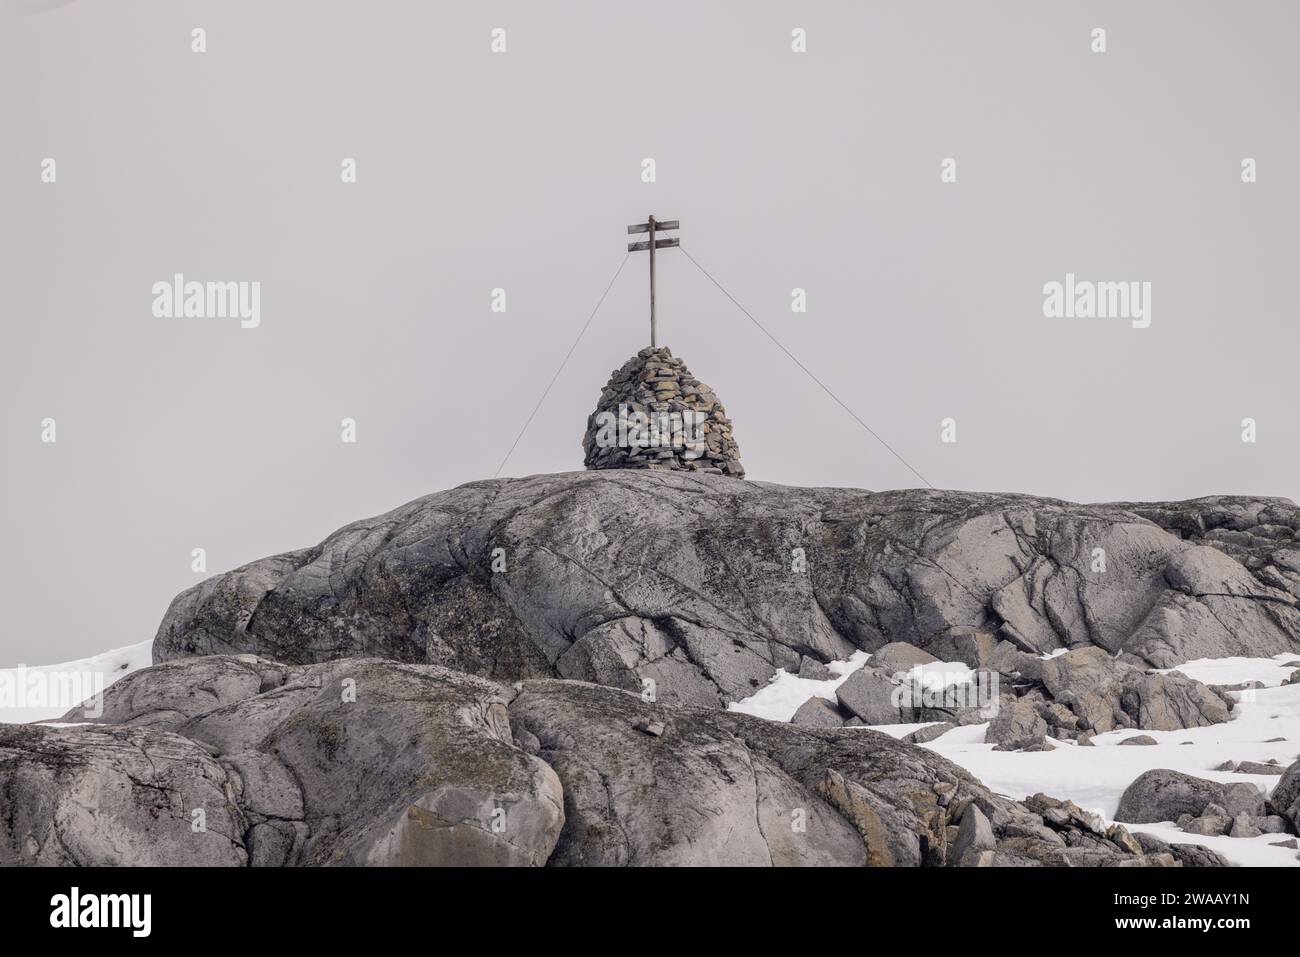 A memorial marker in Antarctica. Stock Photo